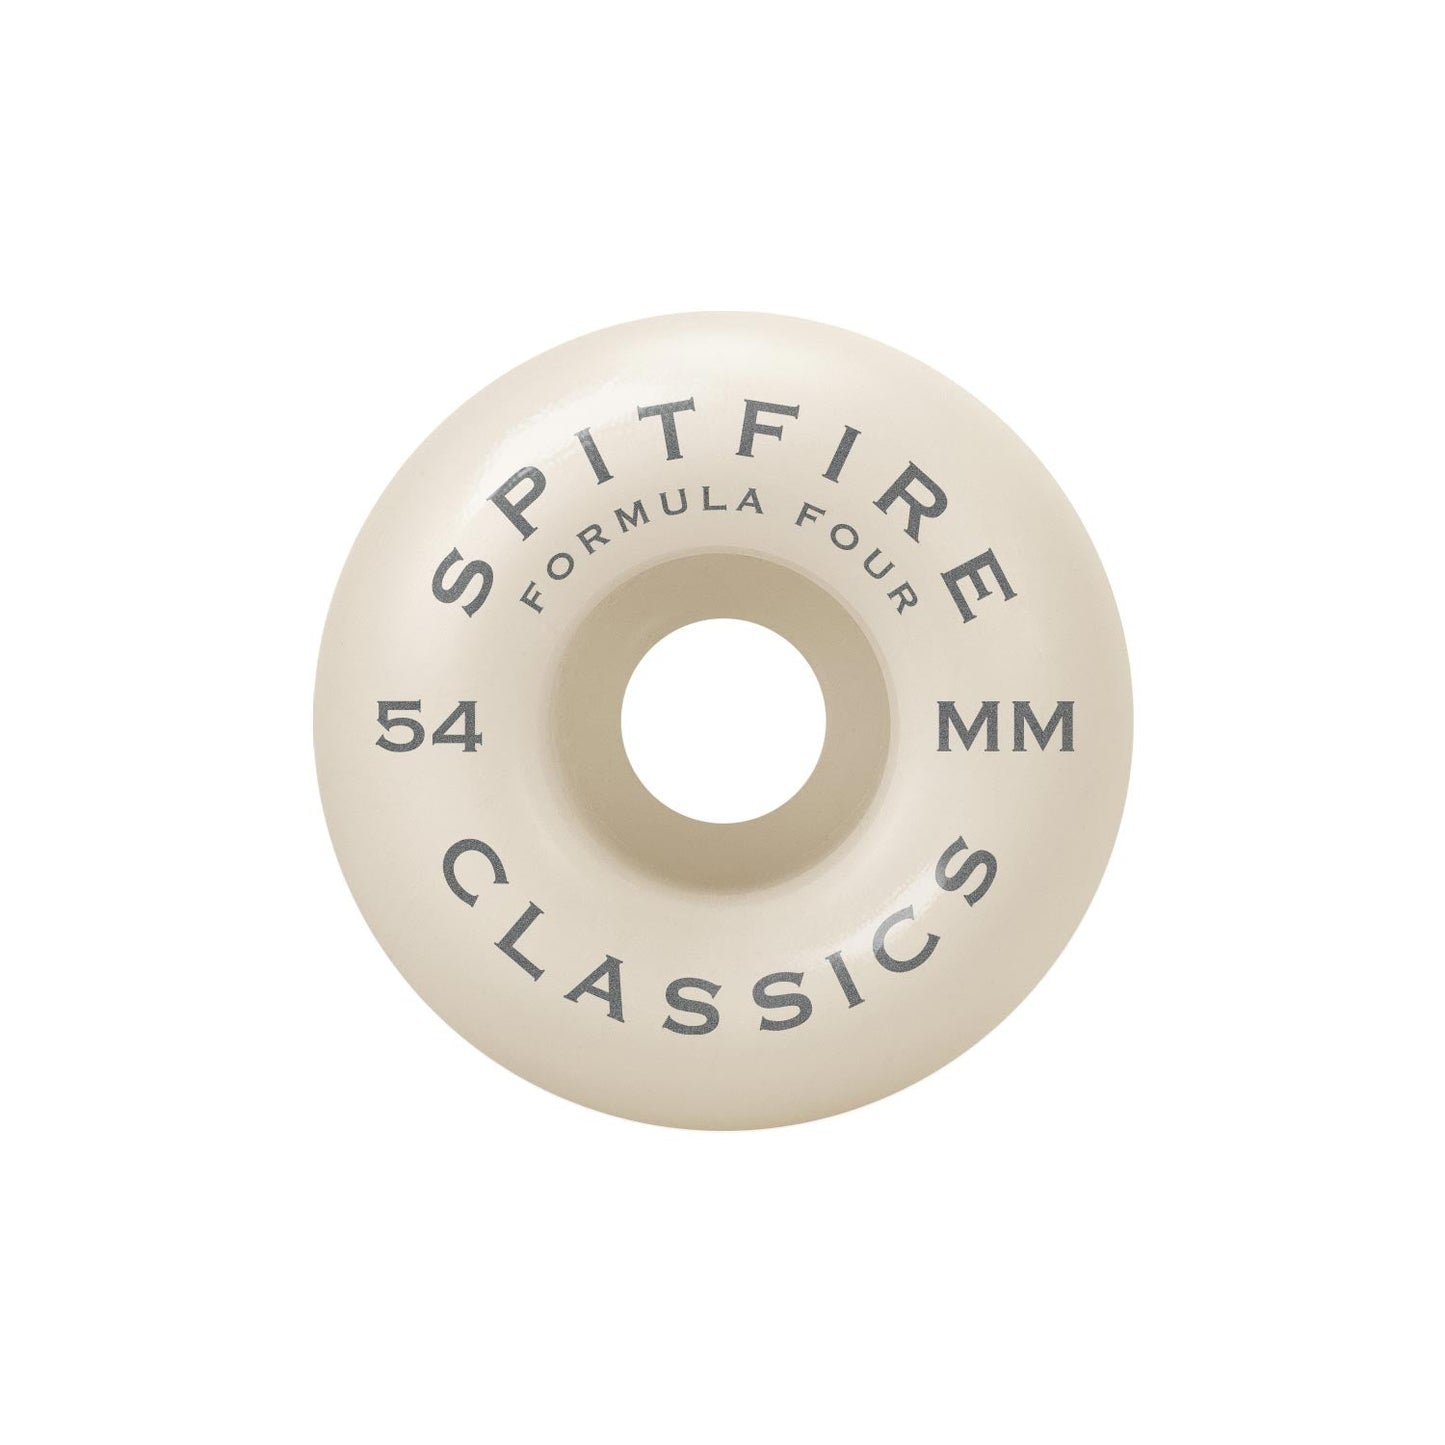 Spitfire Formula Four 99D Classics wheels (54mm), Silver - Tiki Room Skateboards - 2